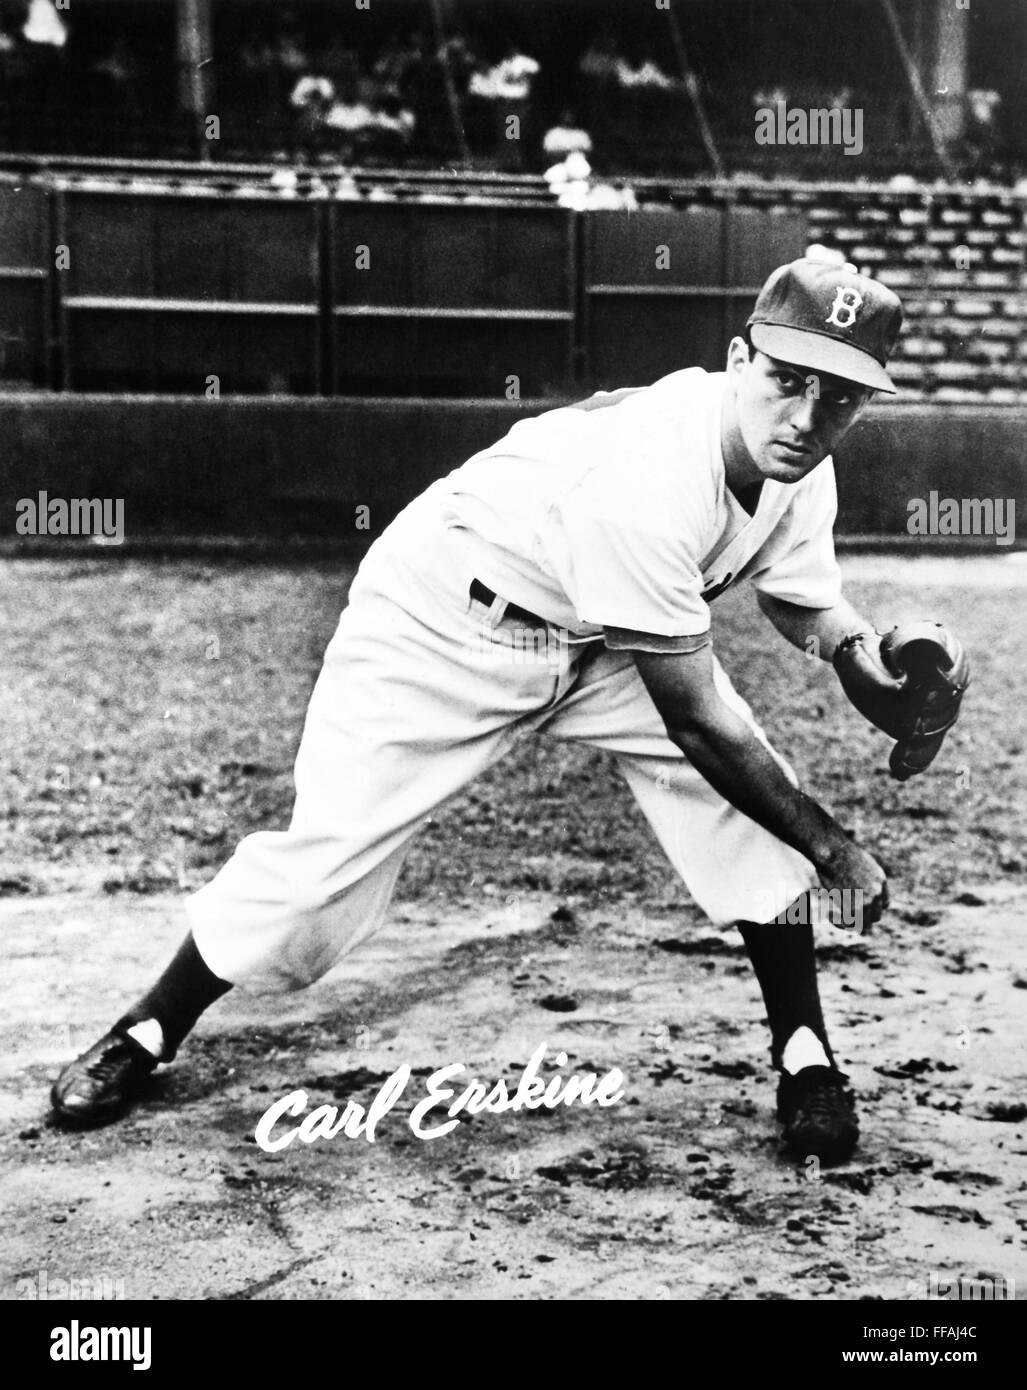 CARL ERSKINE (1926-). /nAmerican Profi-Baseballspieler. Anfang der 1950er Jahre fotografiert als Mitglied der Brooklyn Dodgers. Stockfoto